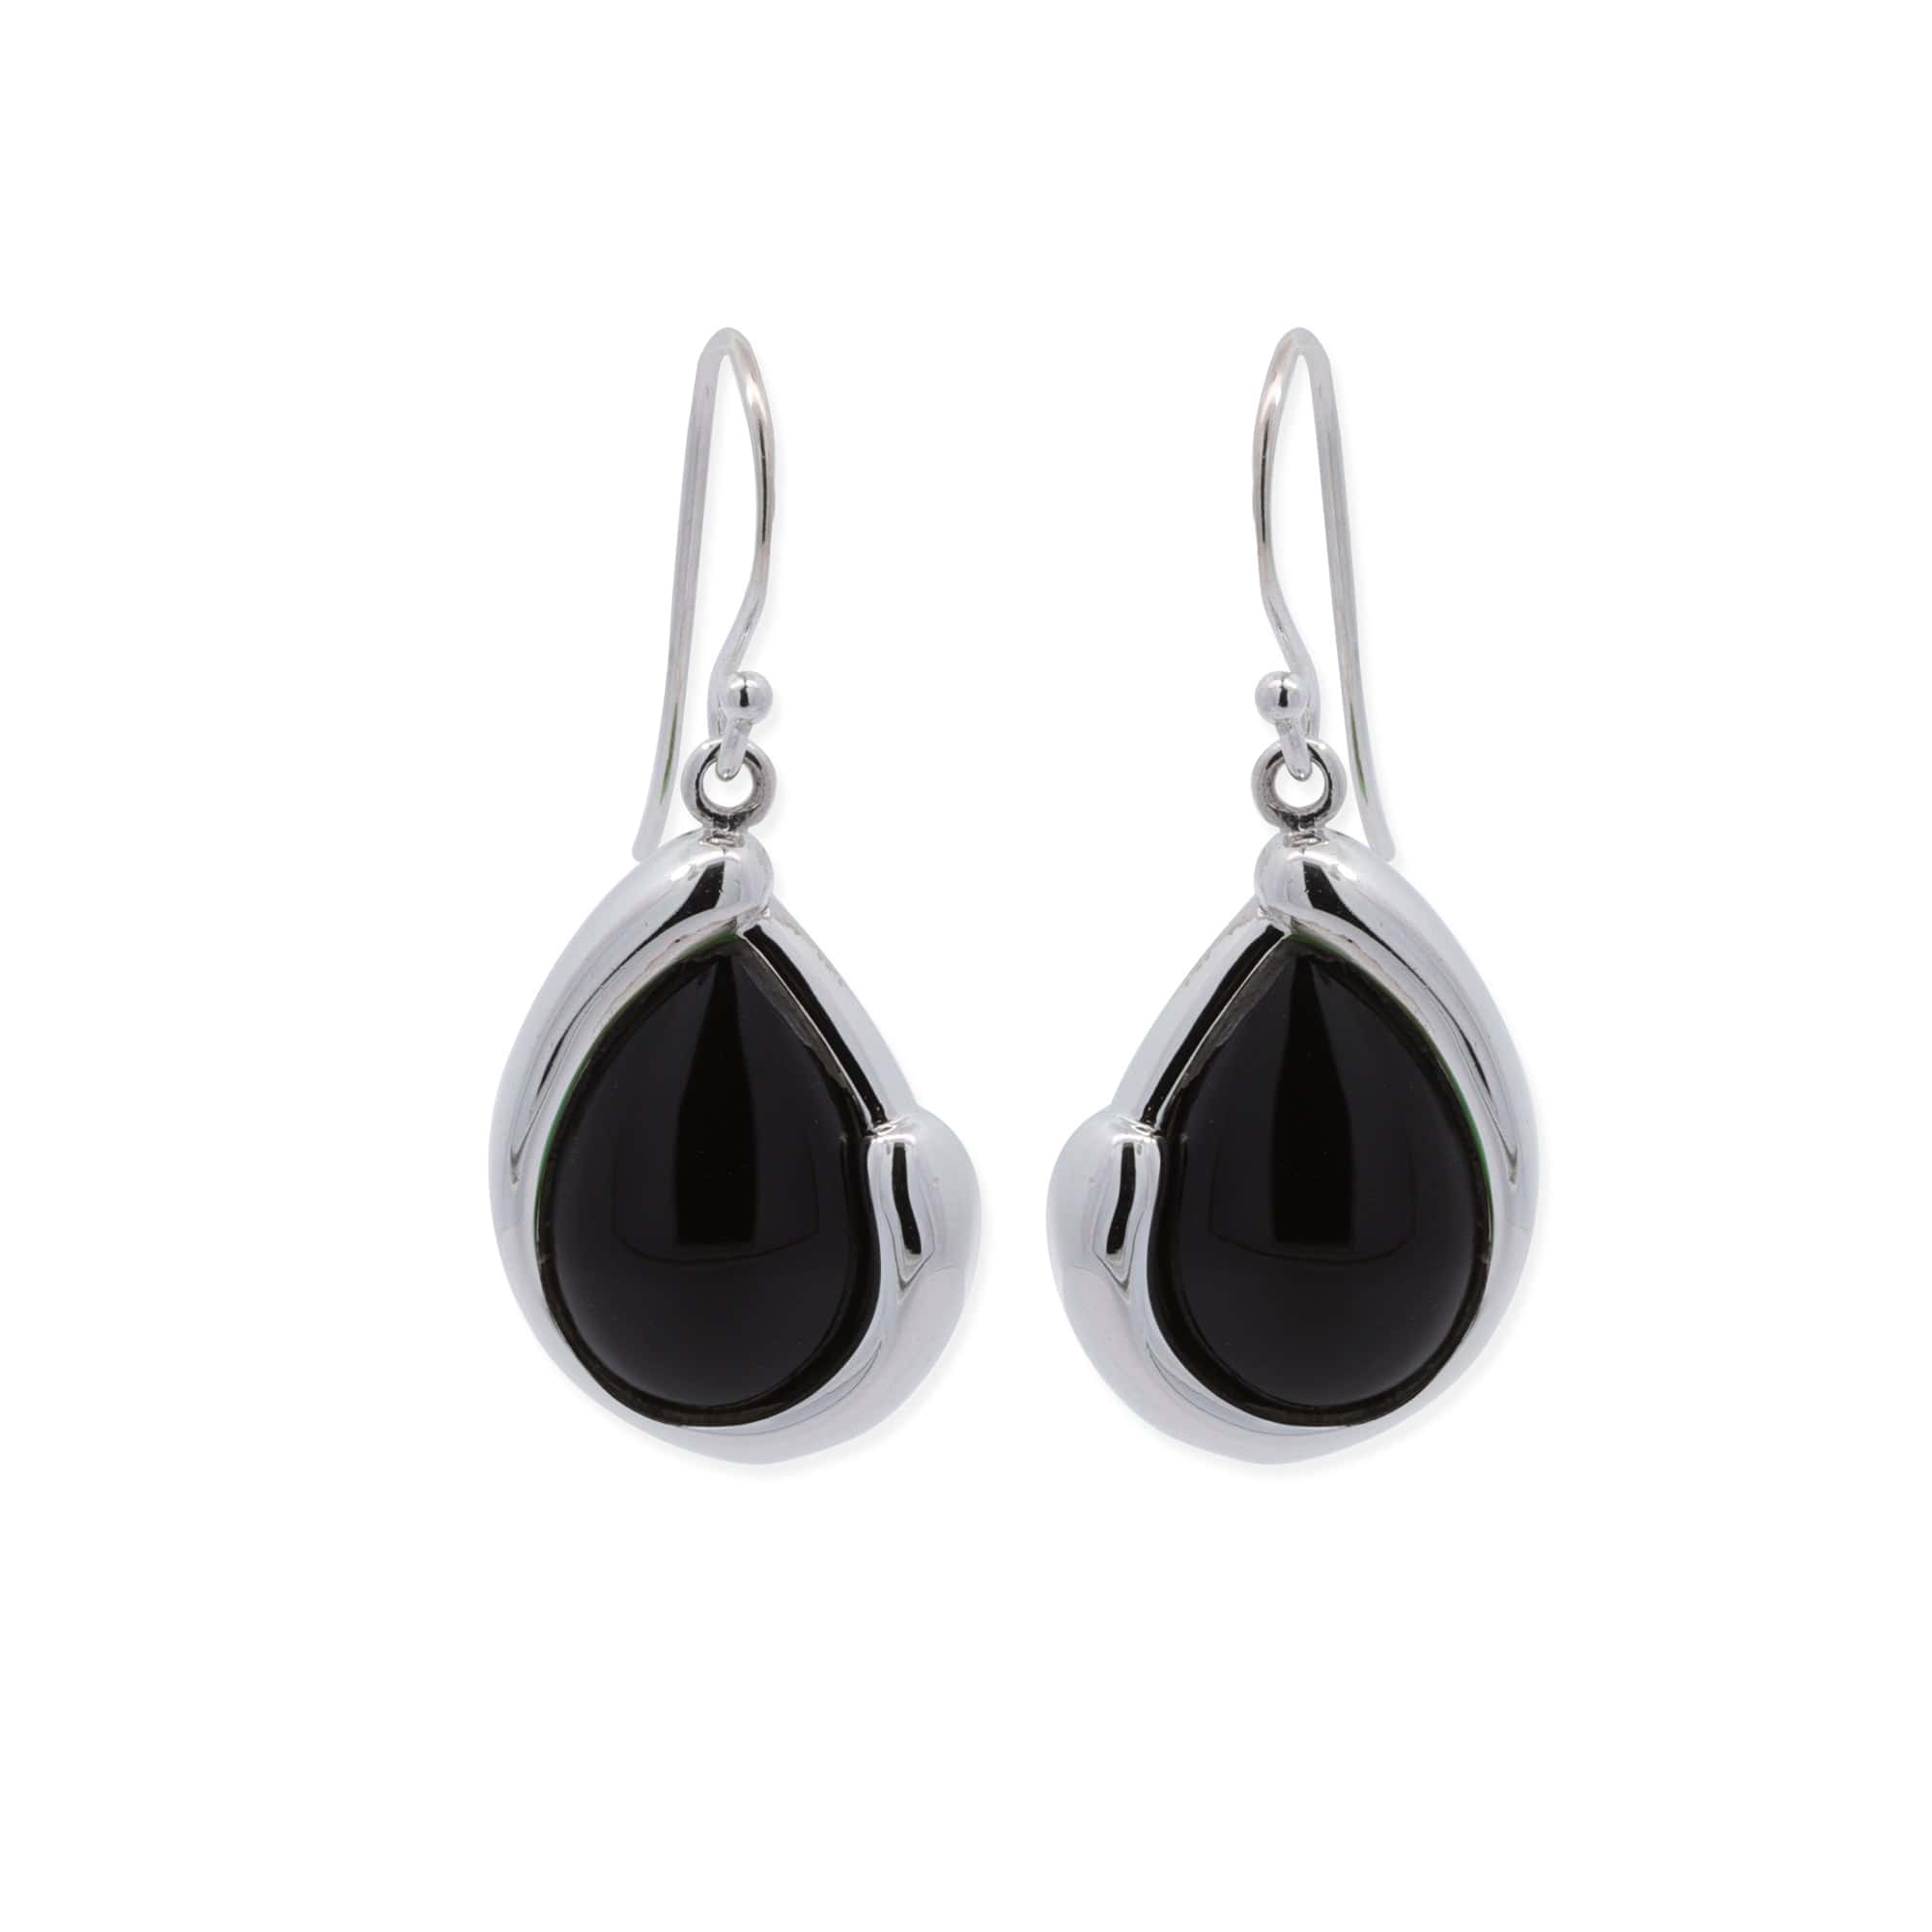 Boma Jewelry Earrings Onyx Organic Drop Shape Dangle Earrings with Genuine Stone